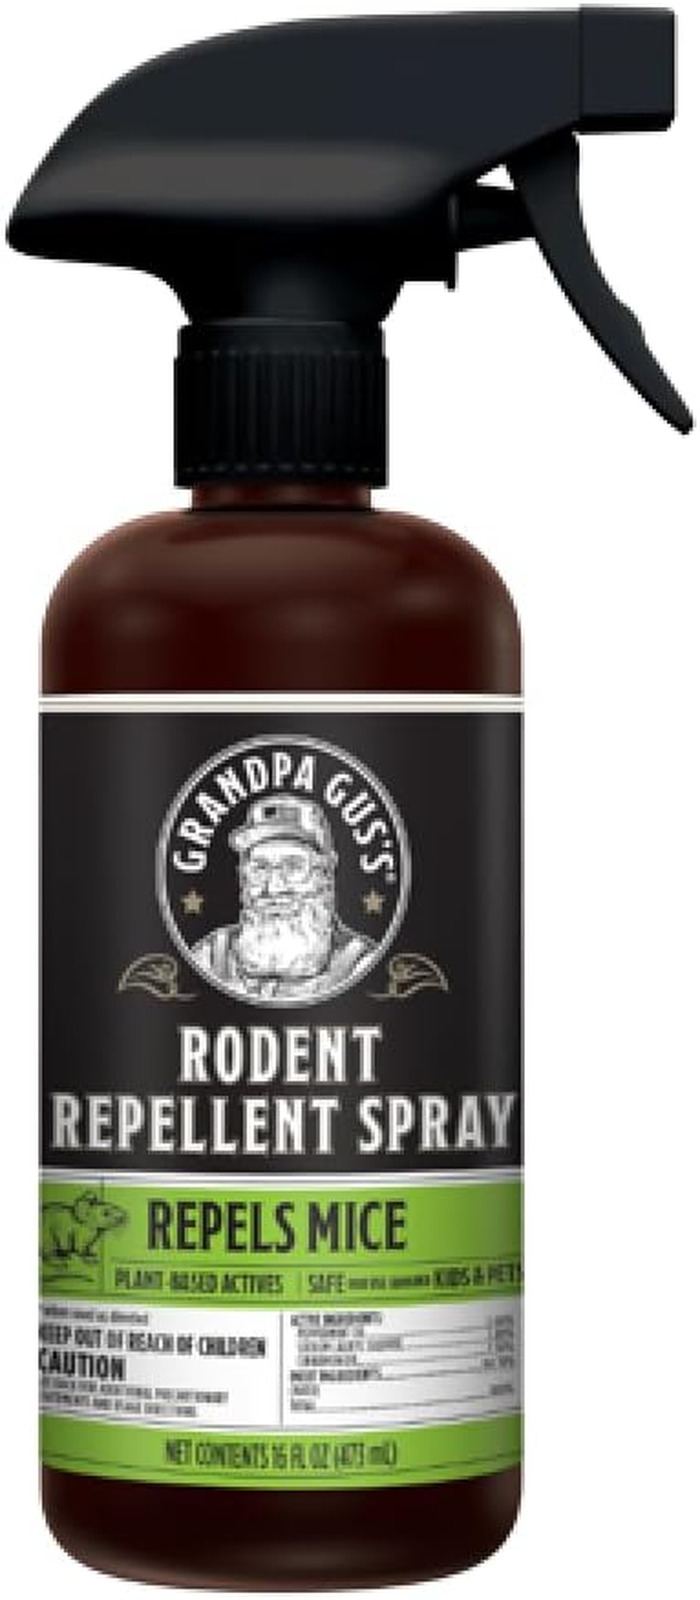 Grandpa Gus'S Double-Potent Rodent Repellent Spray, Peppermint & Cinnamon Oil